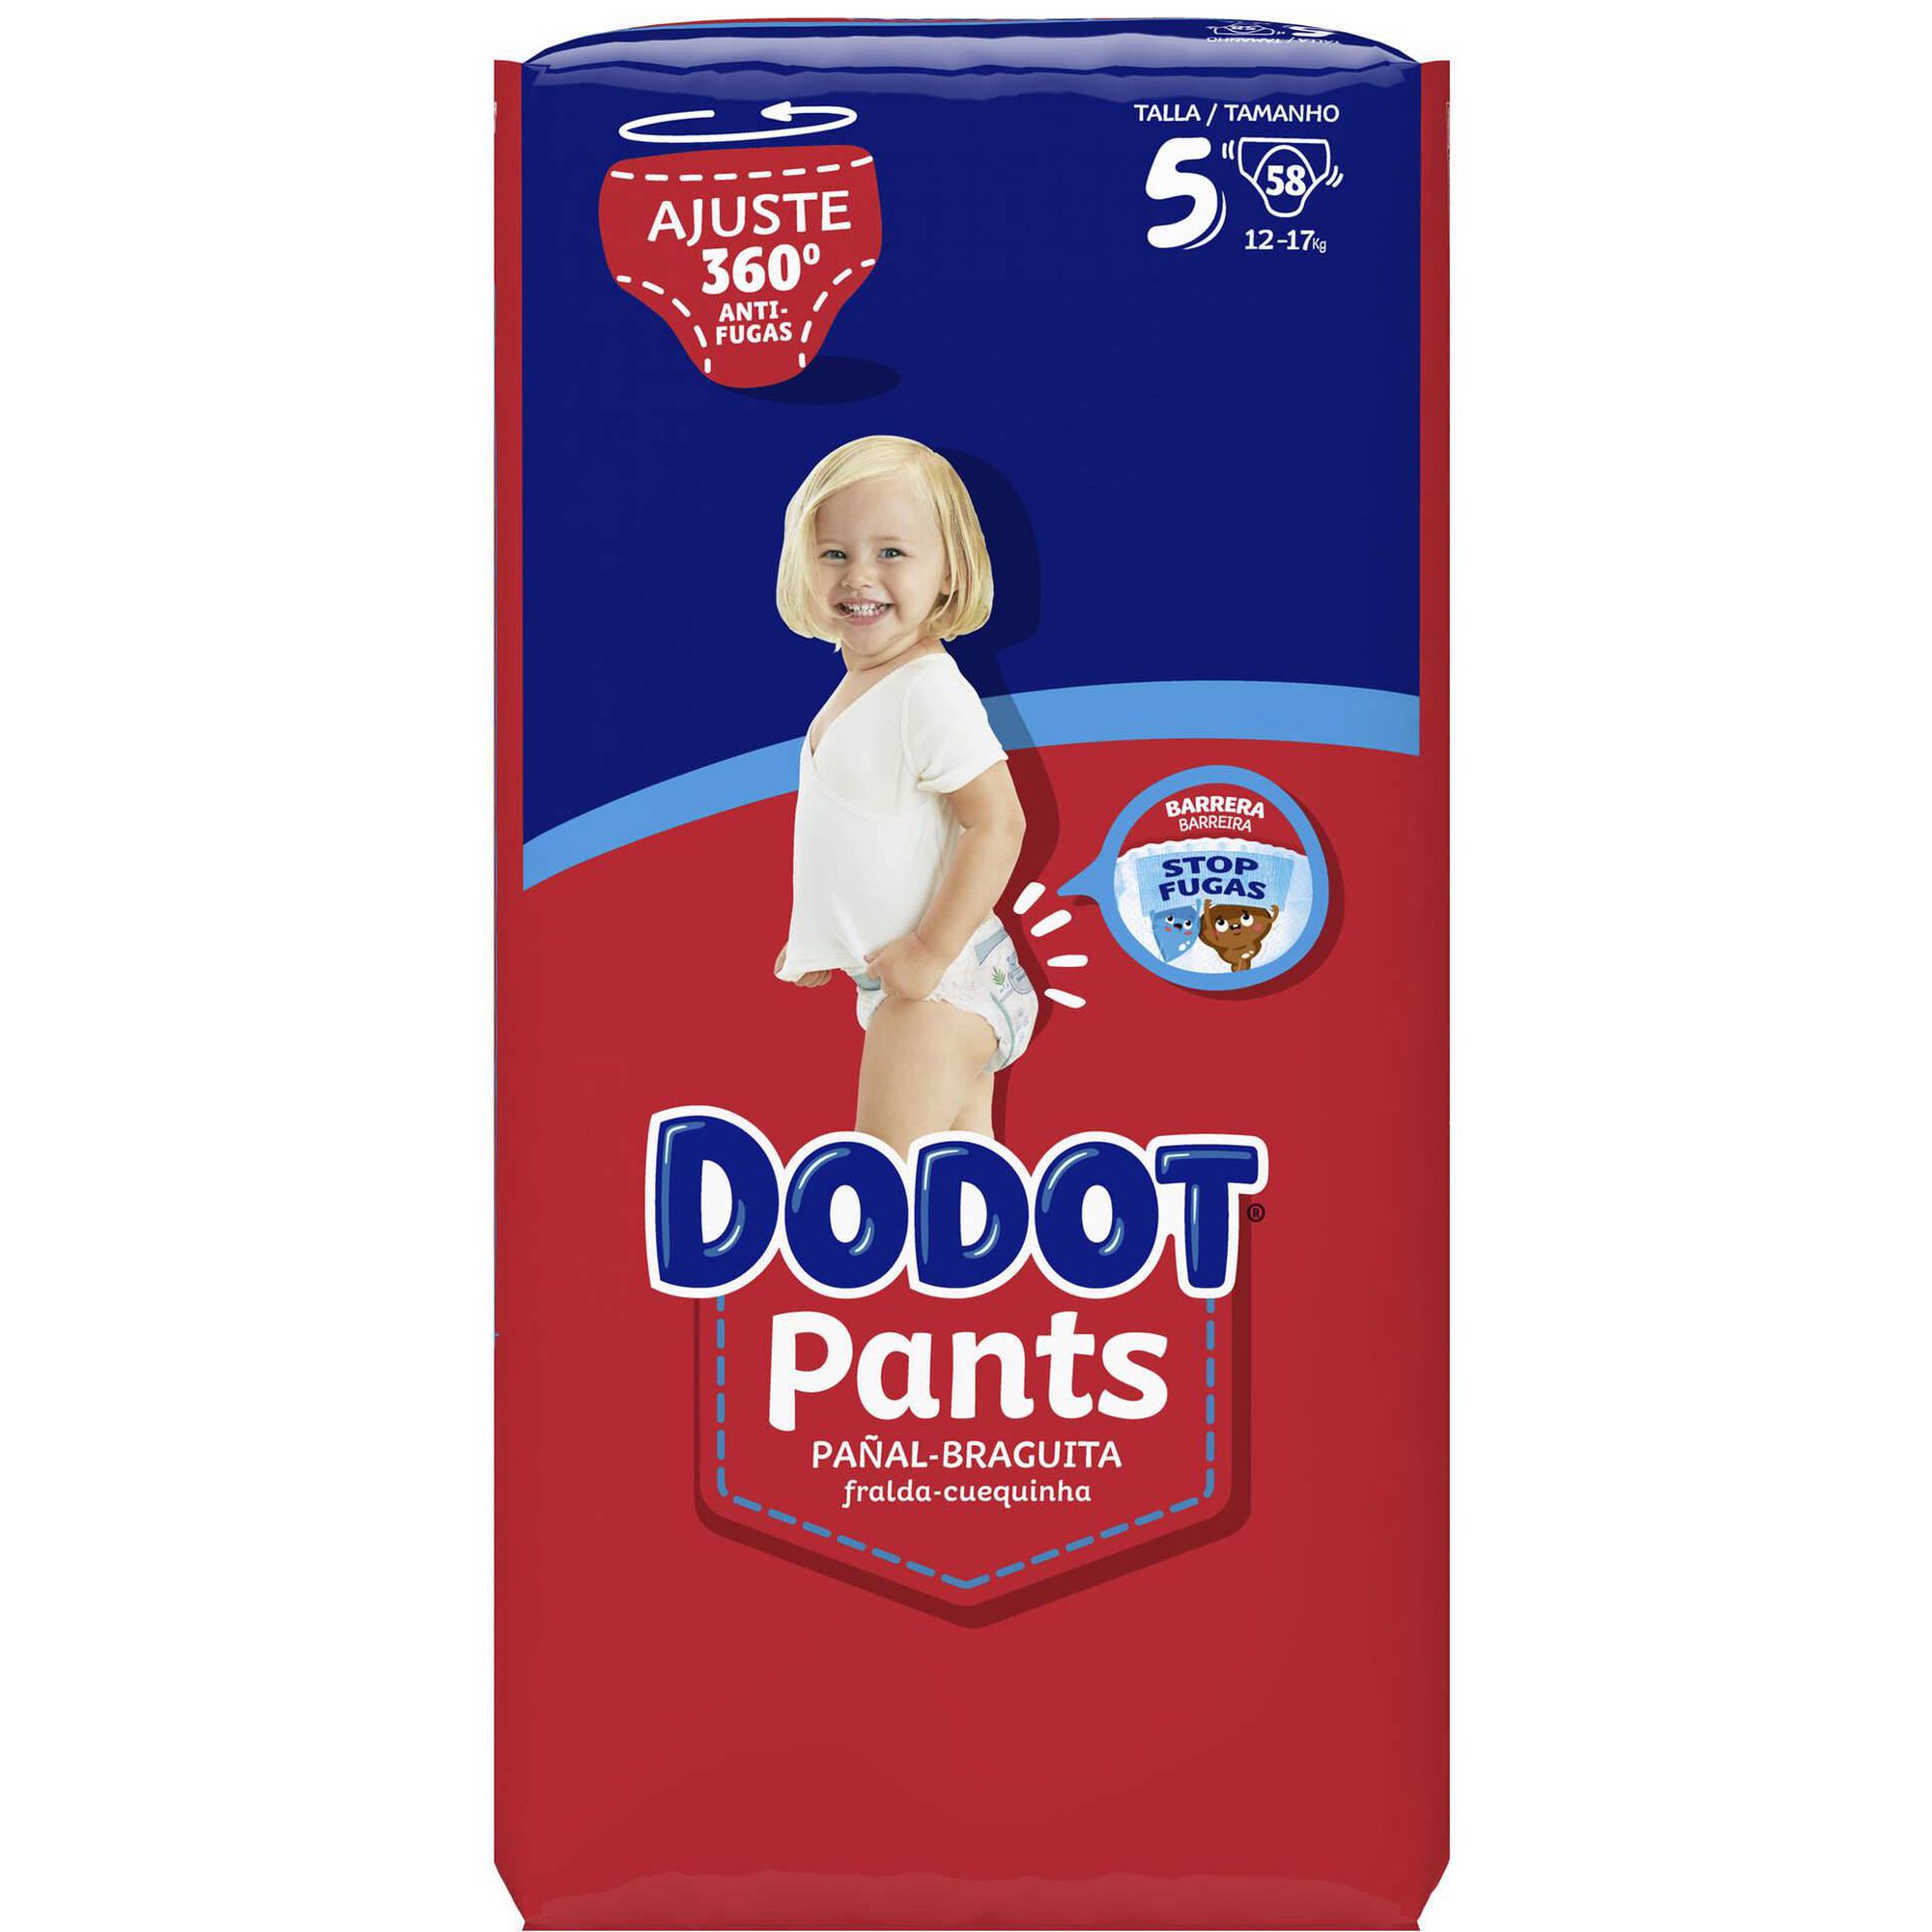 Pañales Dodot Pants Talla 7 17 kg (23 Unidades) – Mundo das Crianças